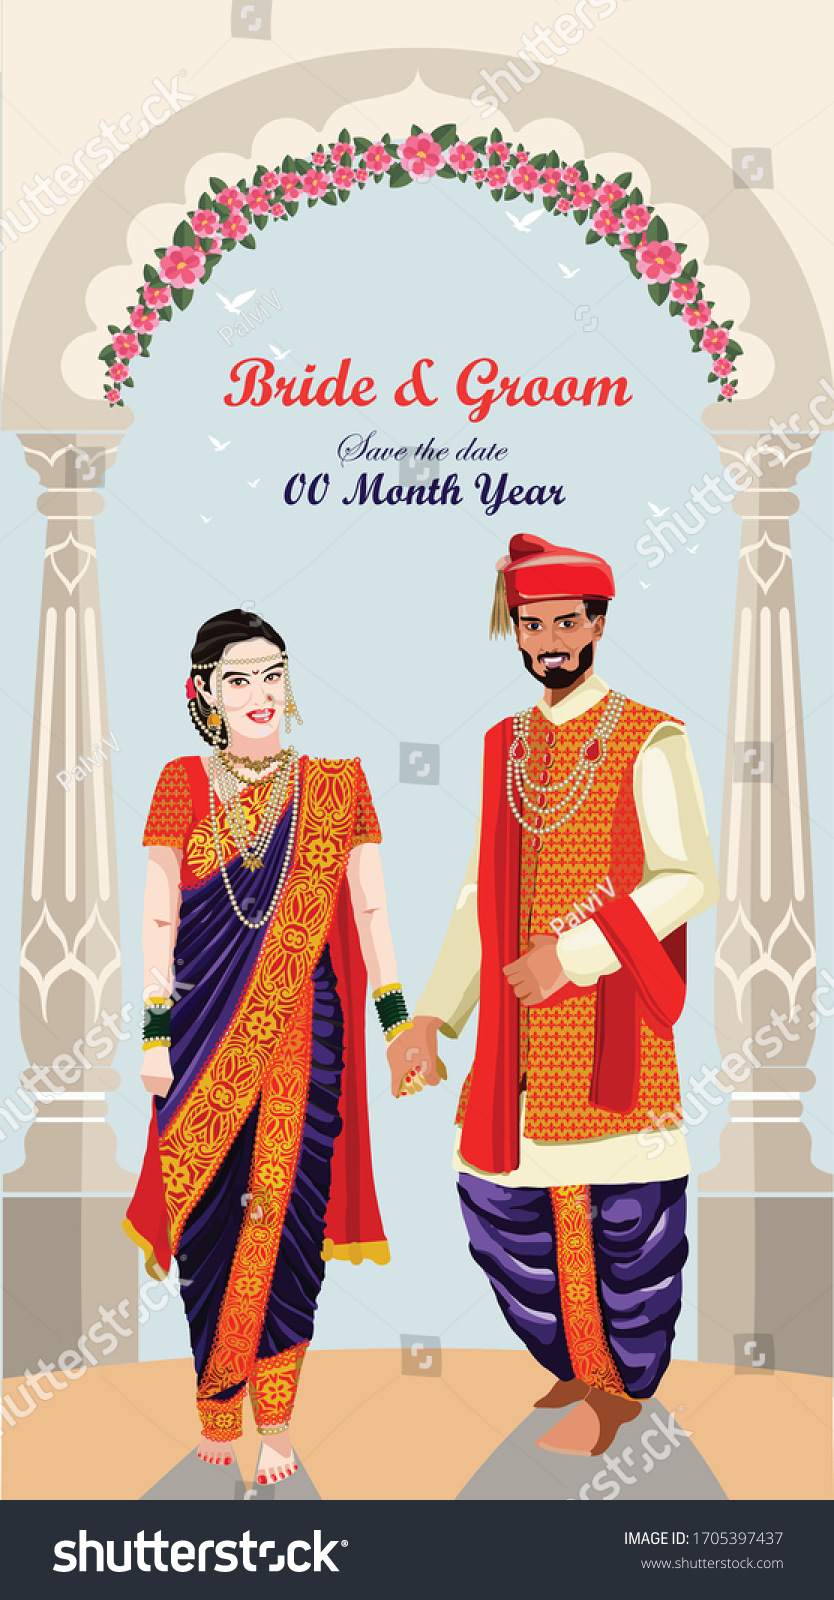 Vector Indian Bride Groom Maharashtrian Nauvari เวกเตอร์สต็อก ปลอดค่าลิขสิทธิ์ 1705397437 2523